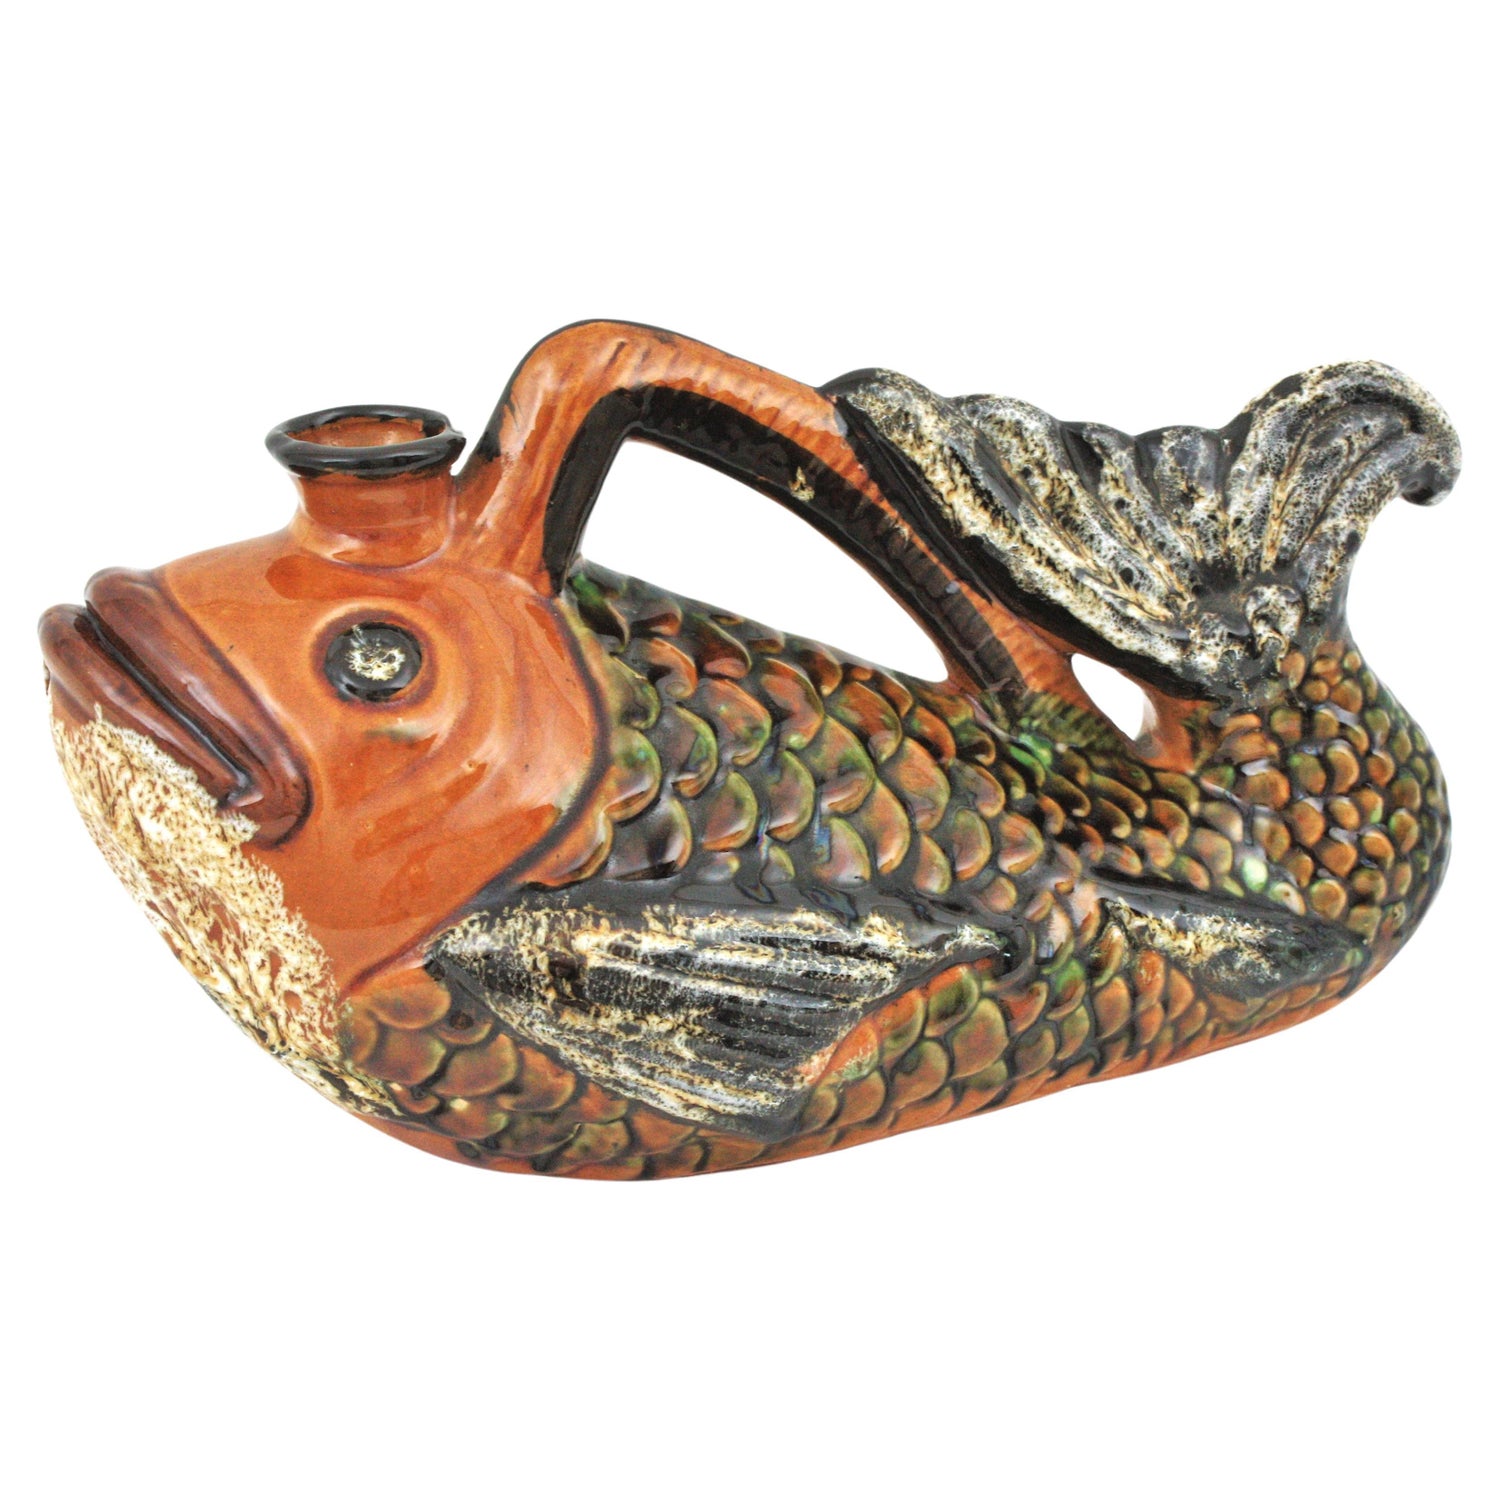 https://a.1stdibscdn.com/portugyese-oversized-glazed-ceramic-gurgle-fish-jug-pitcher-1950s-for-sale/f_10962/f_361588721696604882495/f_36158872_1696604884114_bg_processed.jpg?width=1500